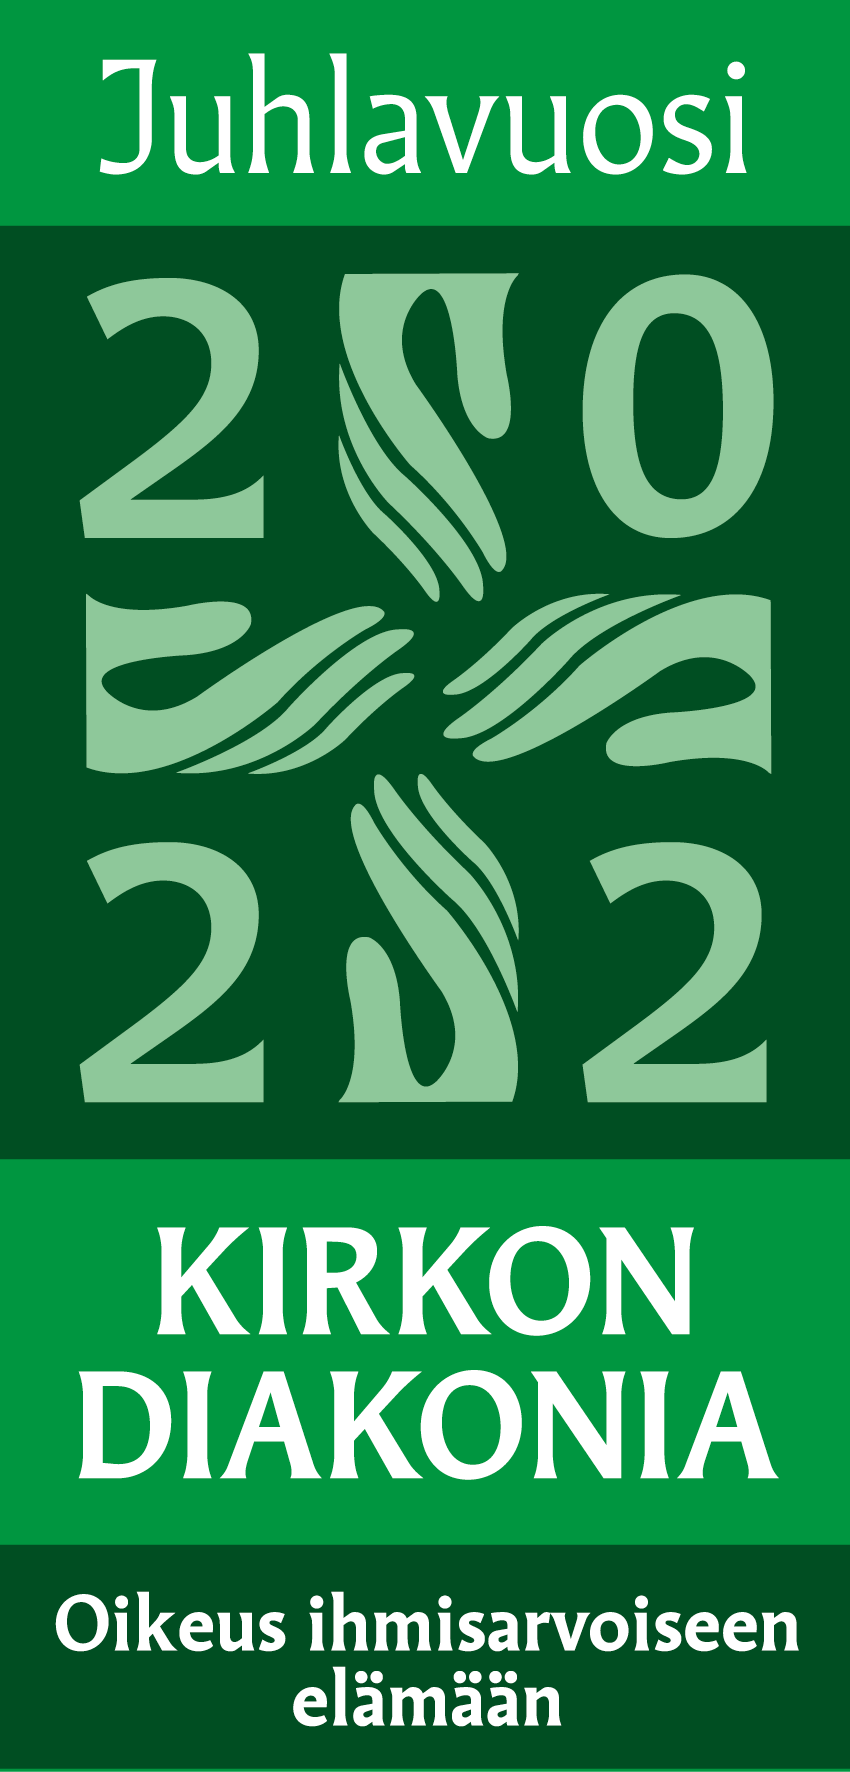 Diakonian juhlavuoden logo